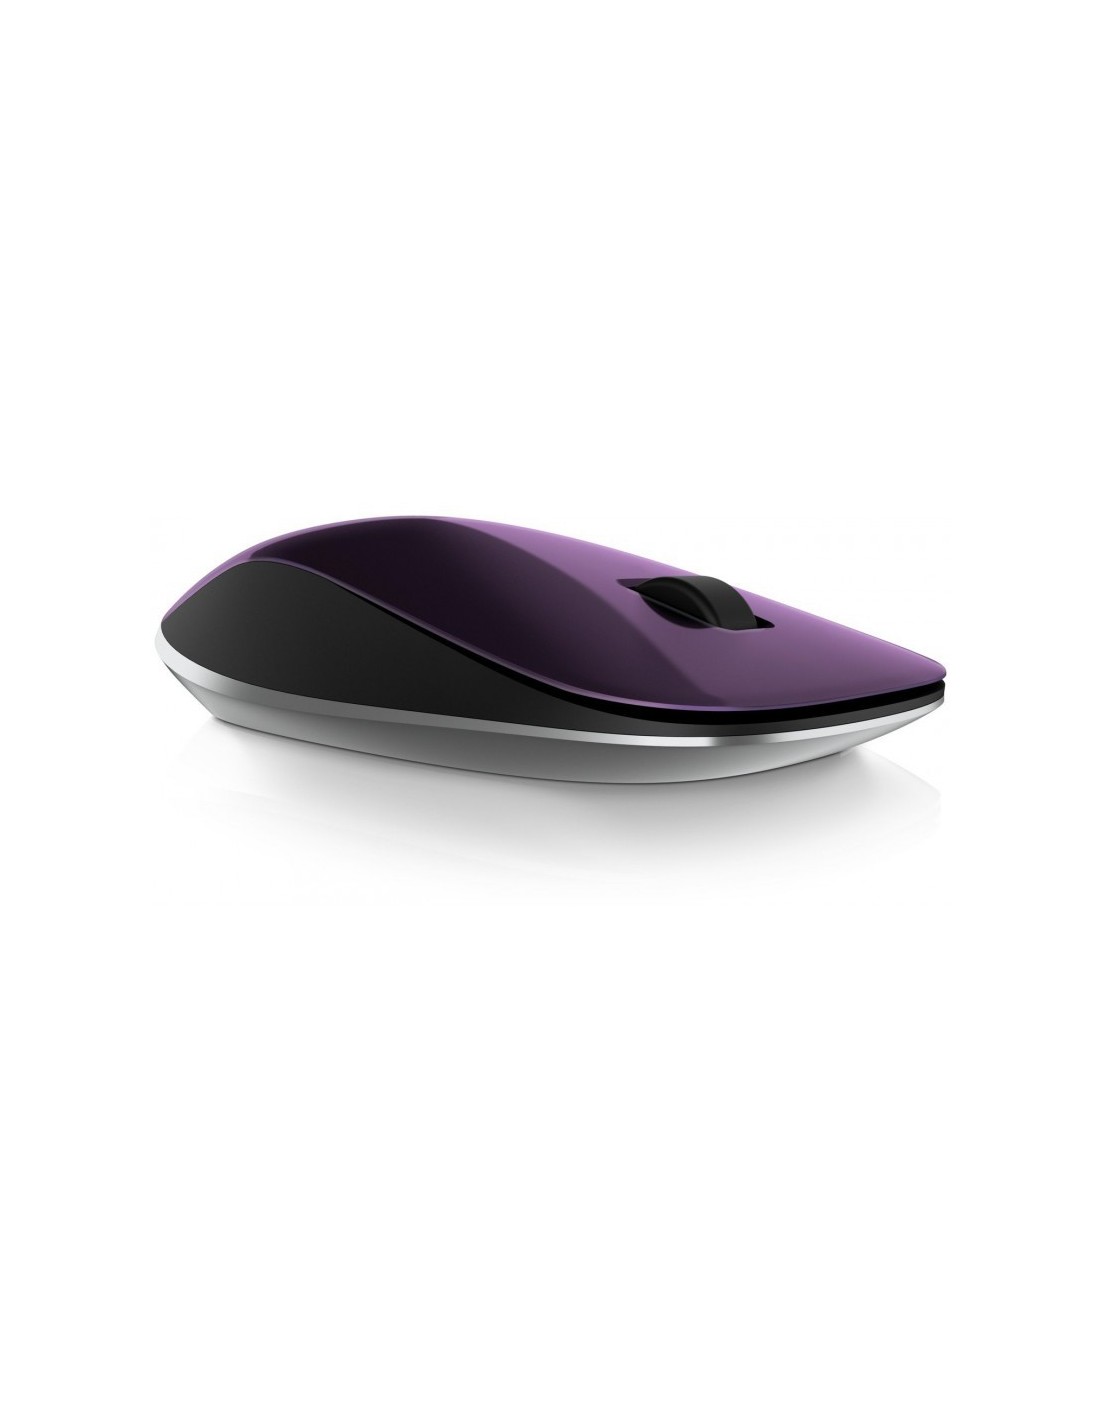 Souris sans fil HP mouse Z4000